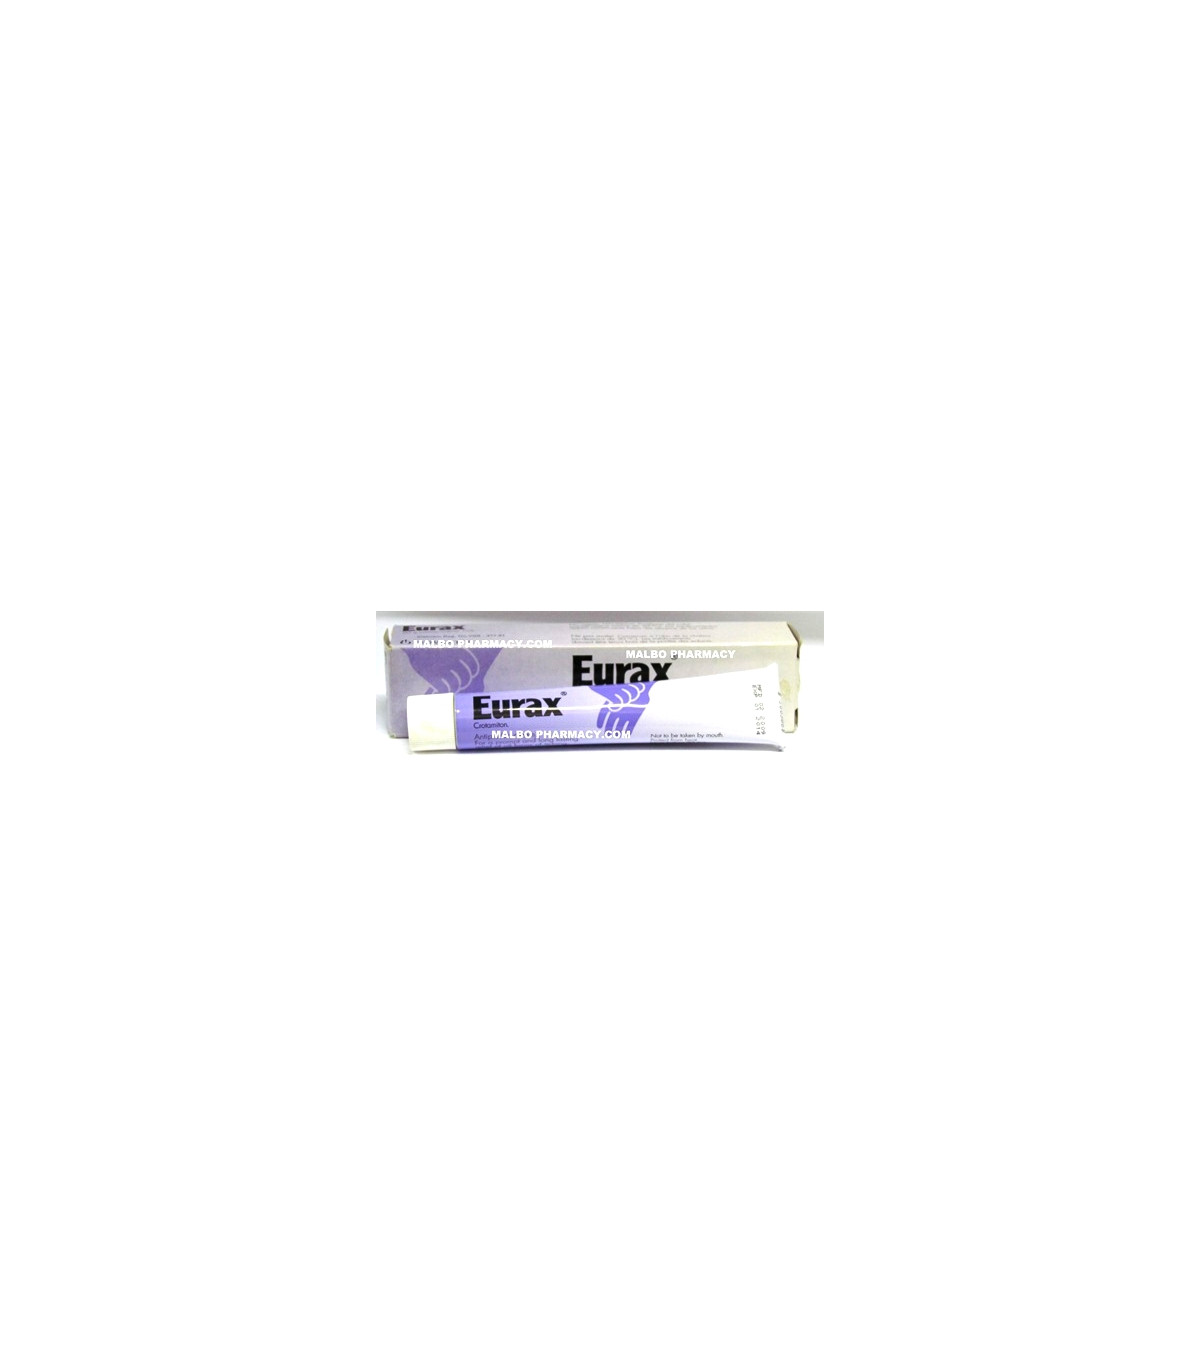 Eurax Antipruritic Cream - 20g